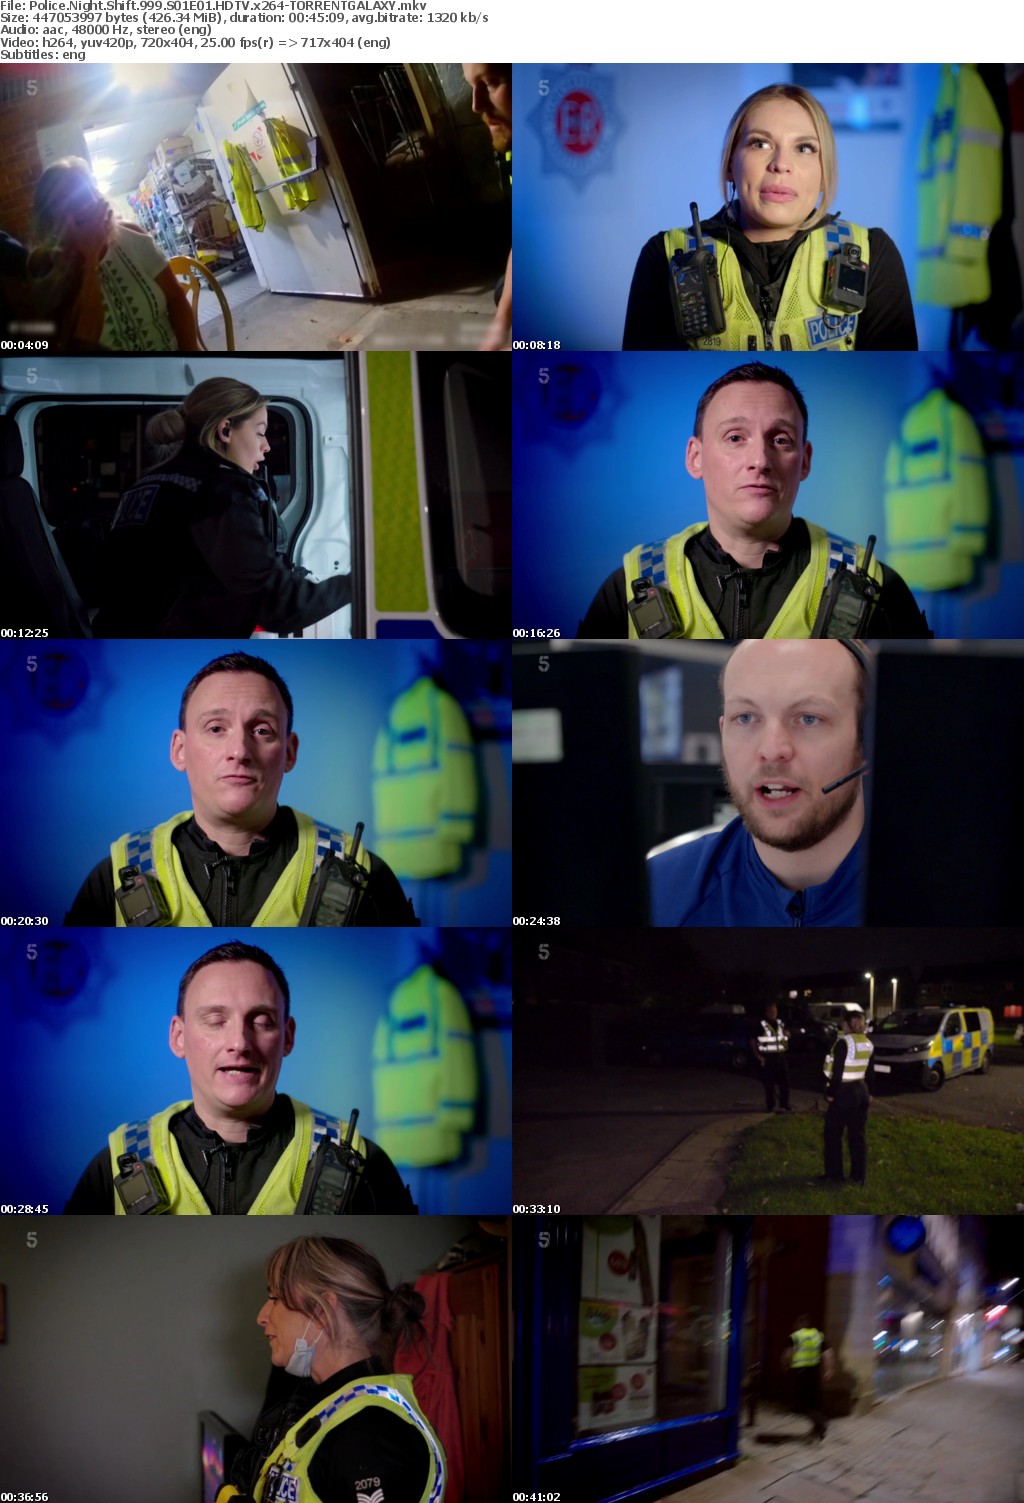 Police Night Shift 999 S01E01 HDTV x264-GALAXY